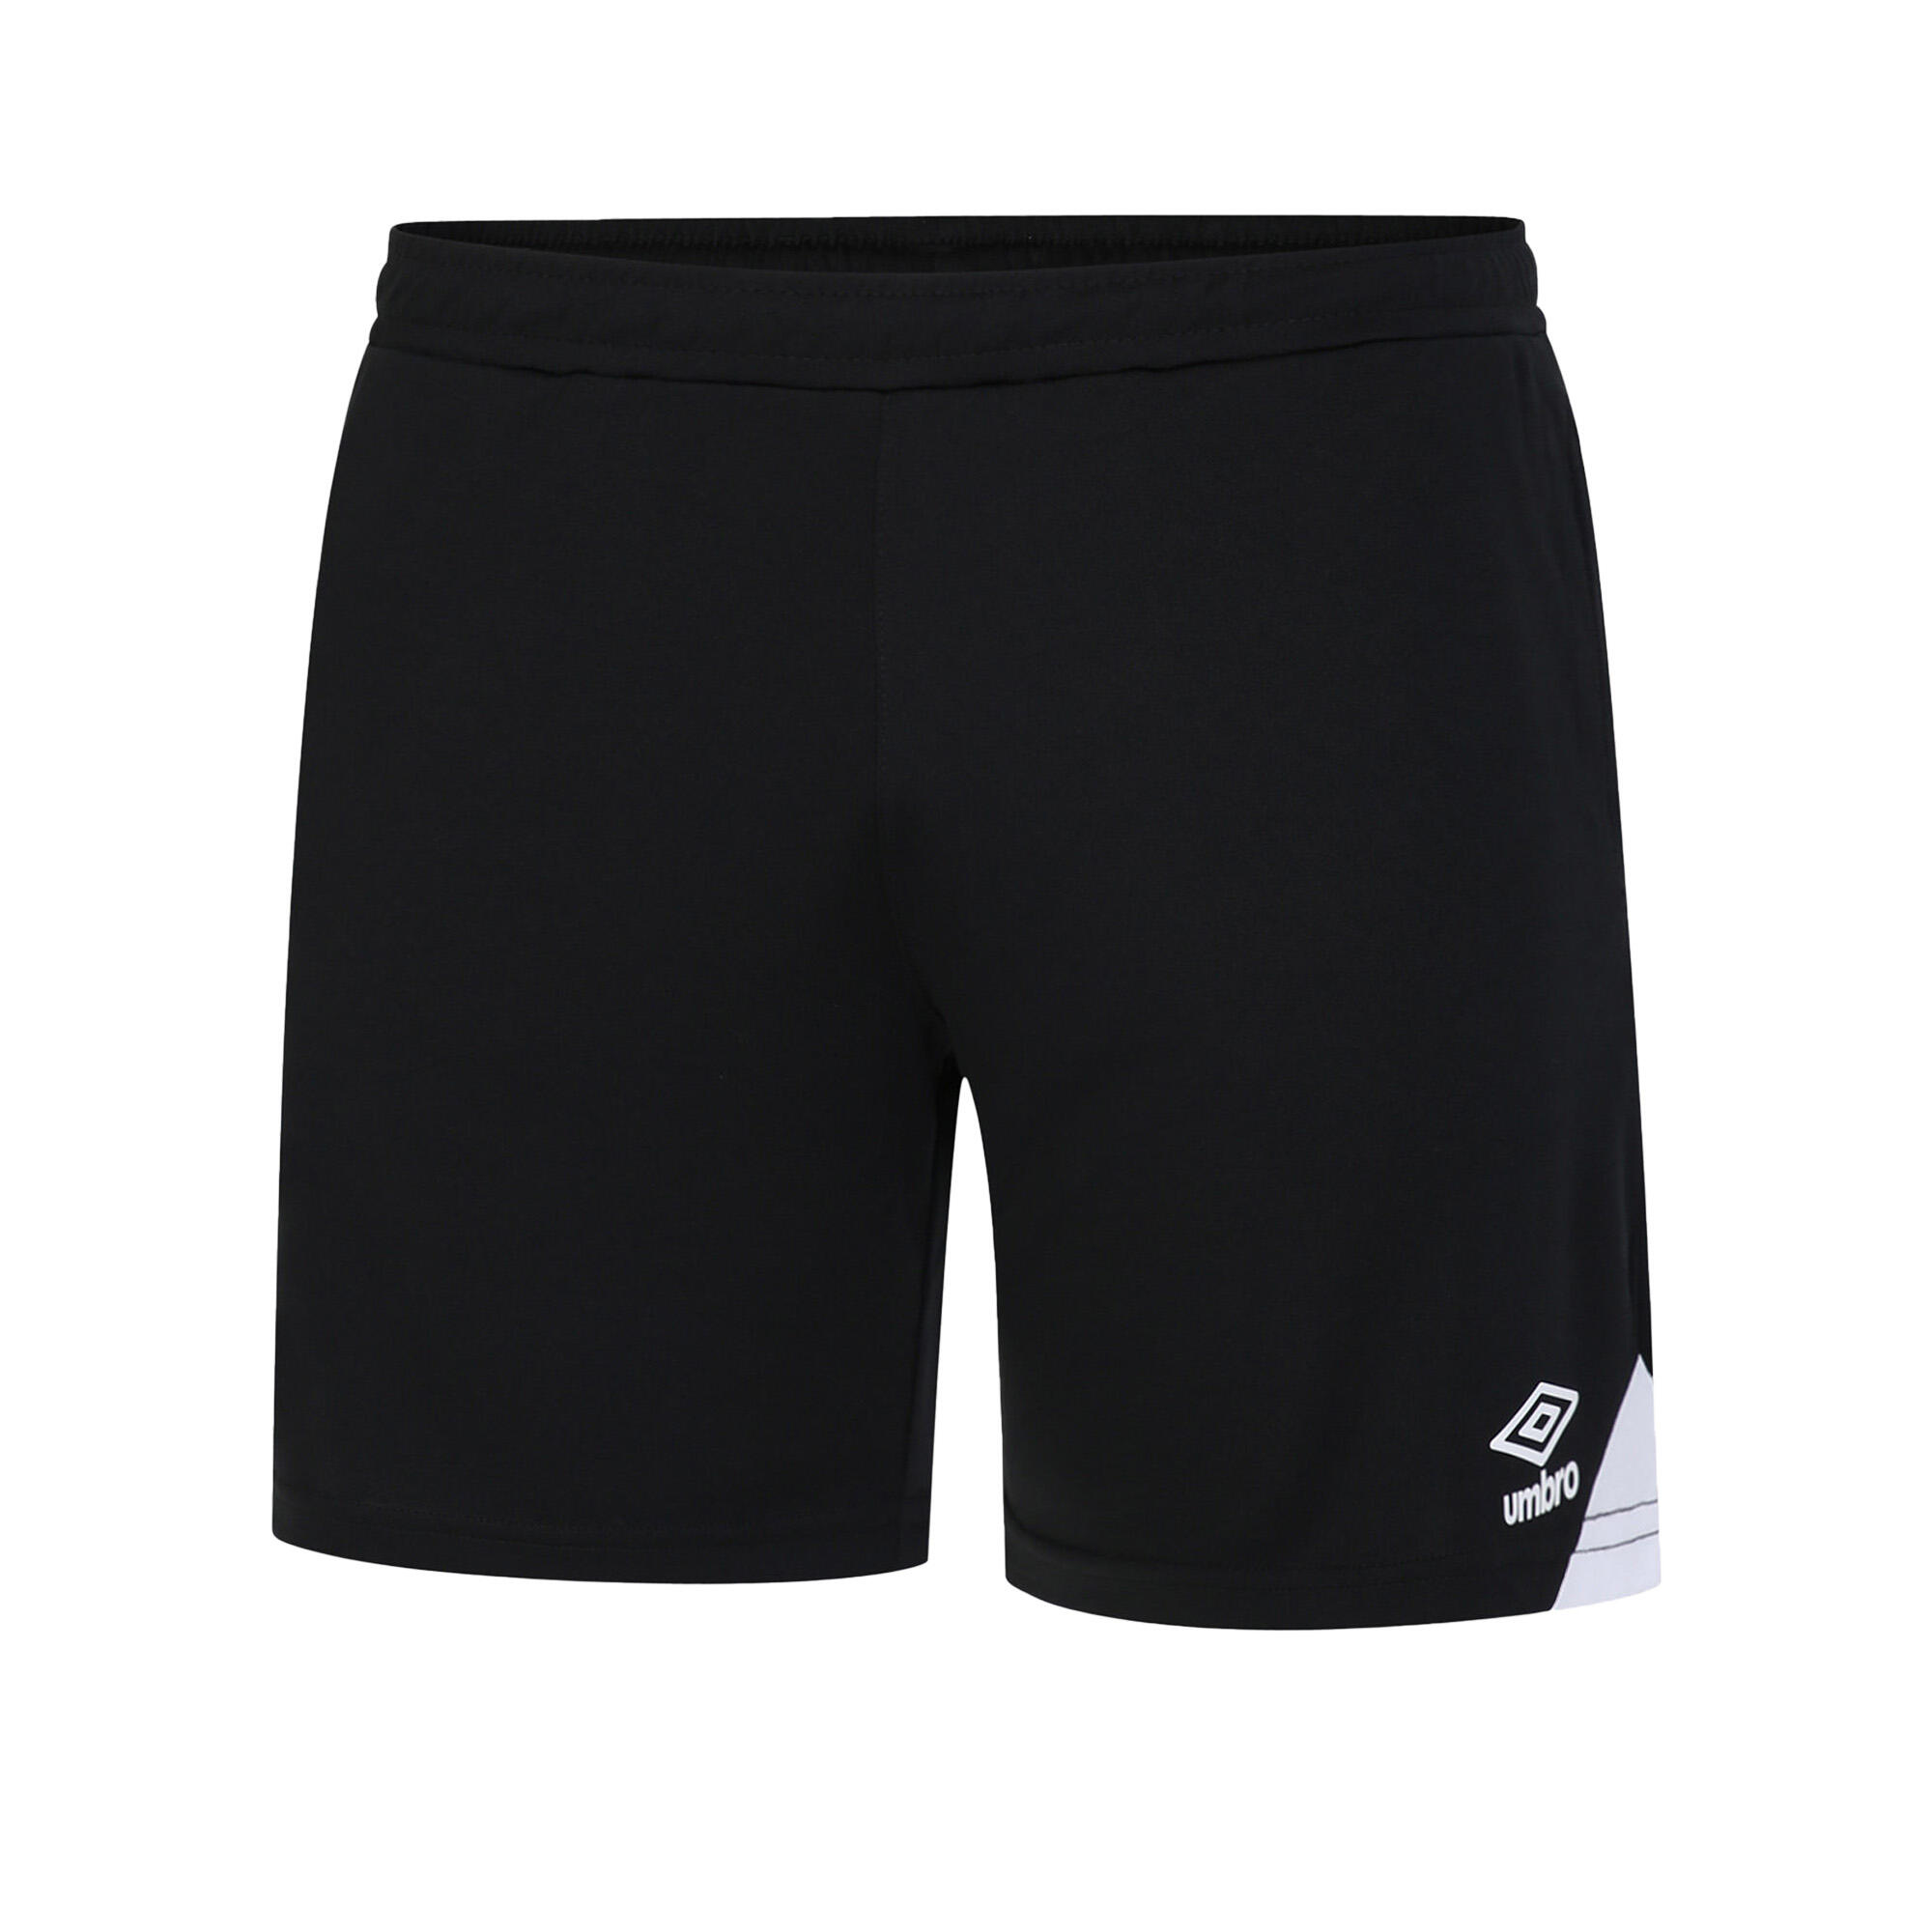 Mens Total Training Shorts (Black/White) 1/3